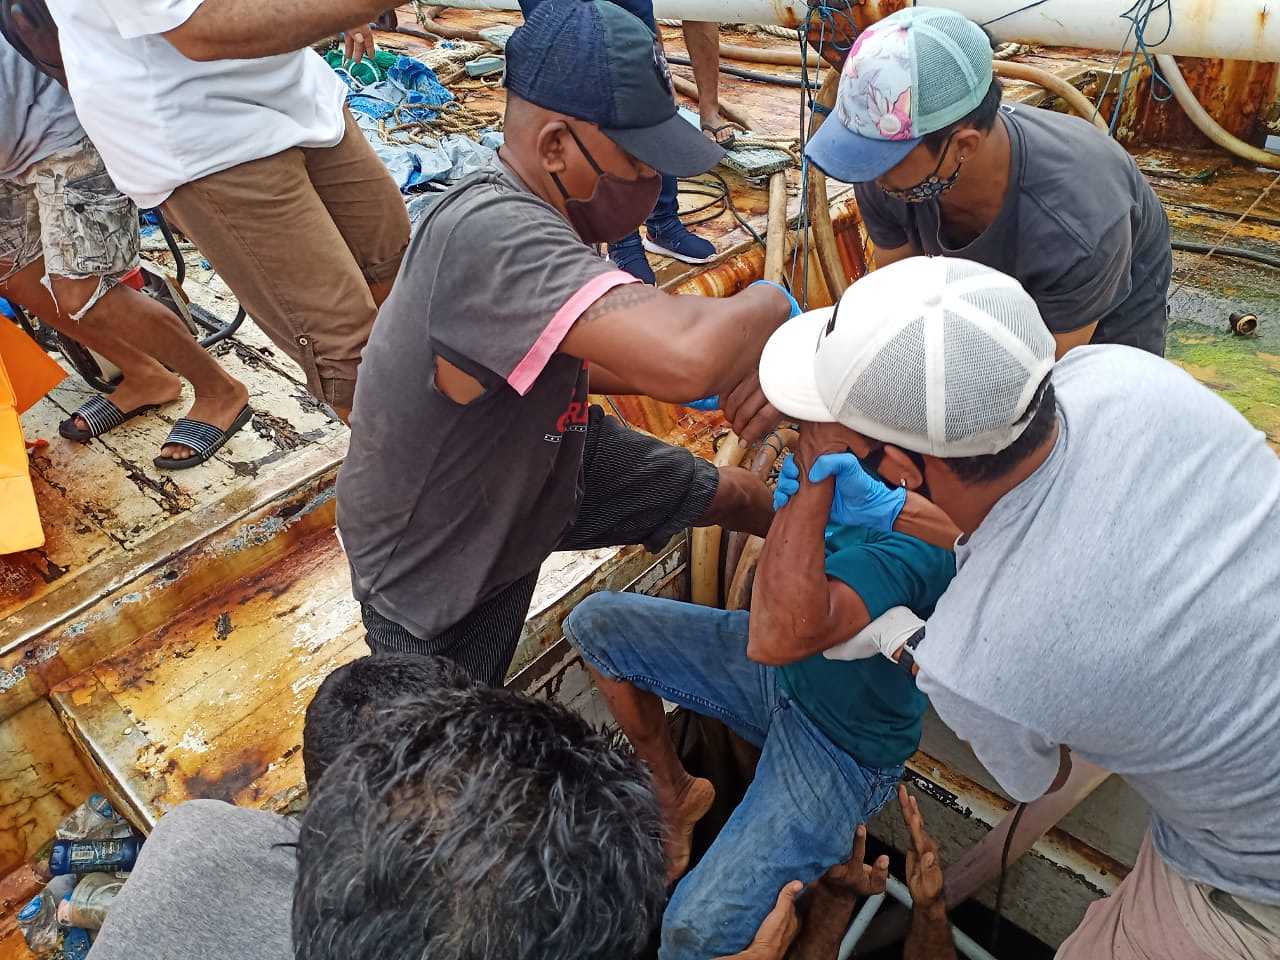 2 Mayat Ditemukan di Atas Kapal Ikan Esih Jaya 1 Milik Perusahan Thailand